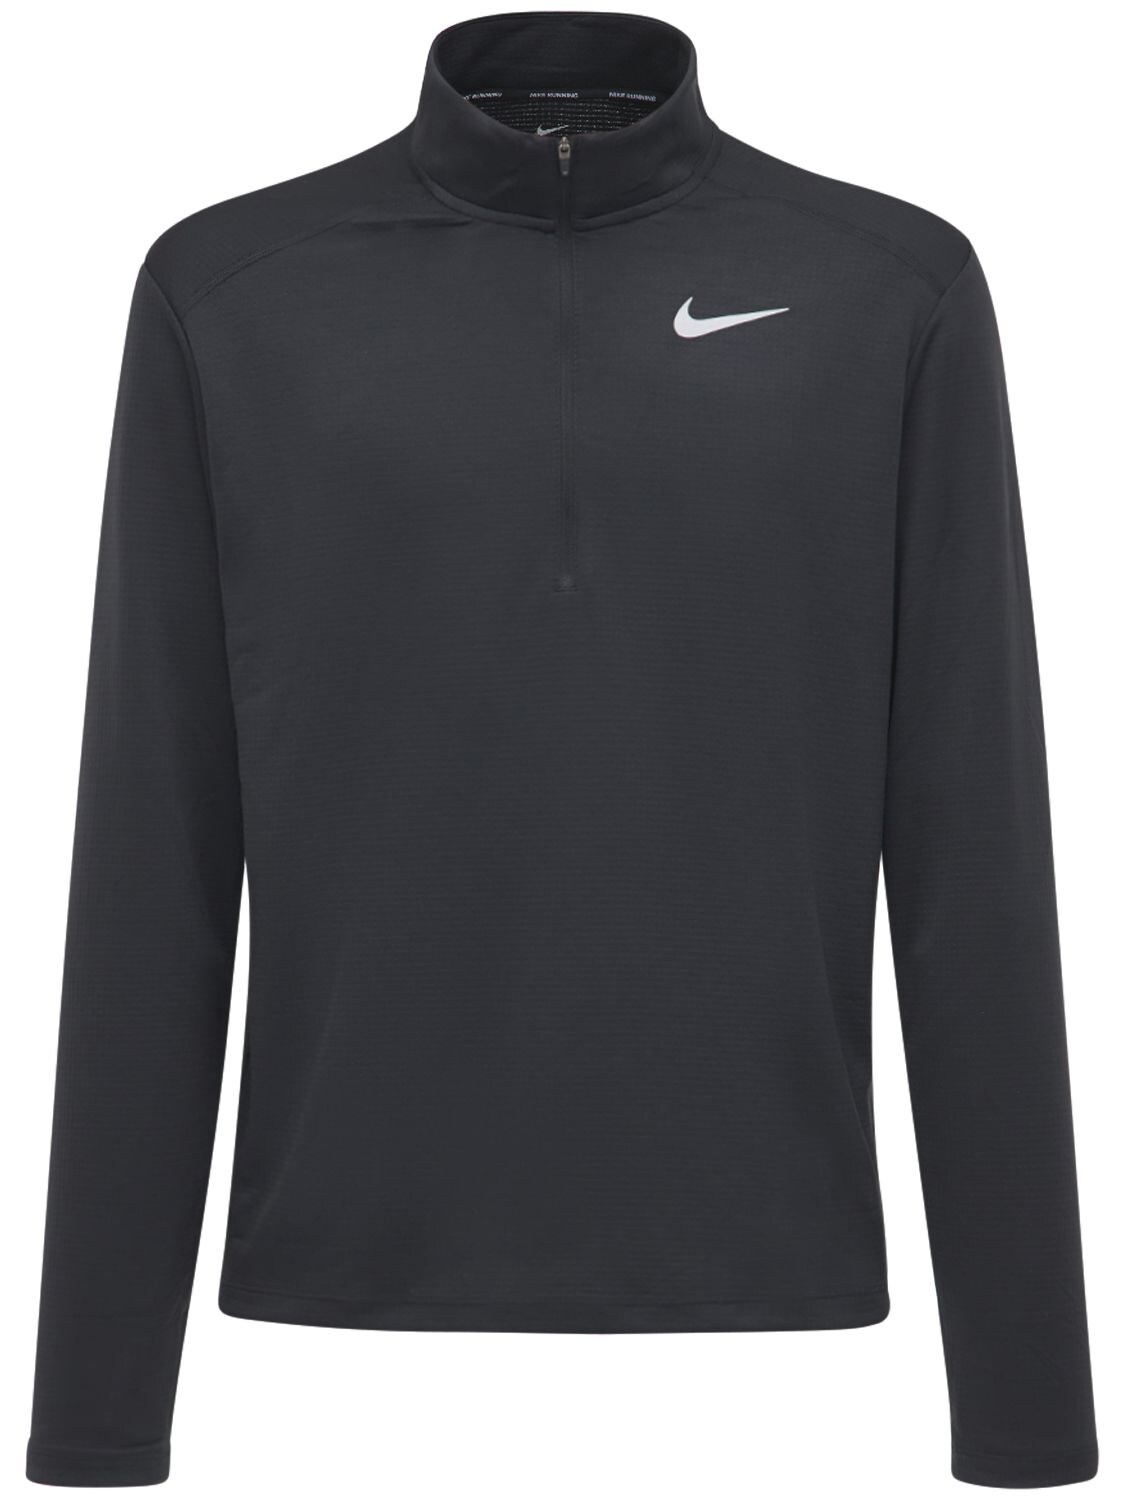 Nike Pacer Running Top In Black